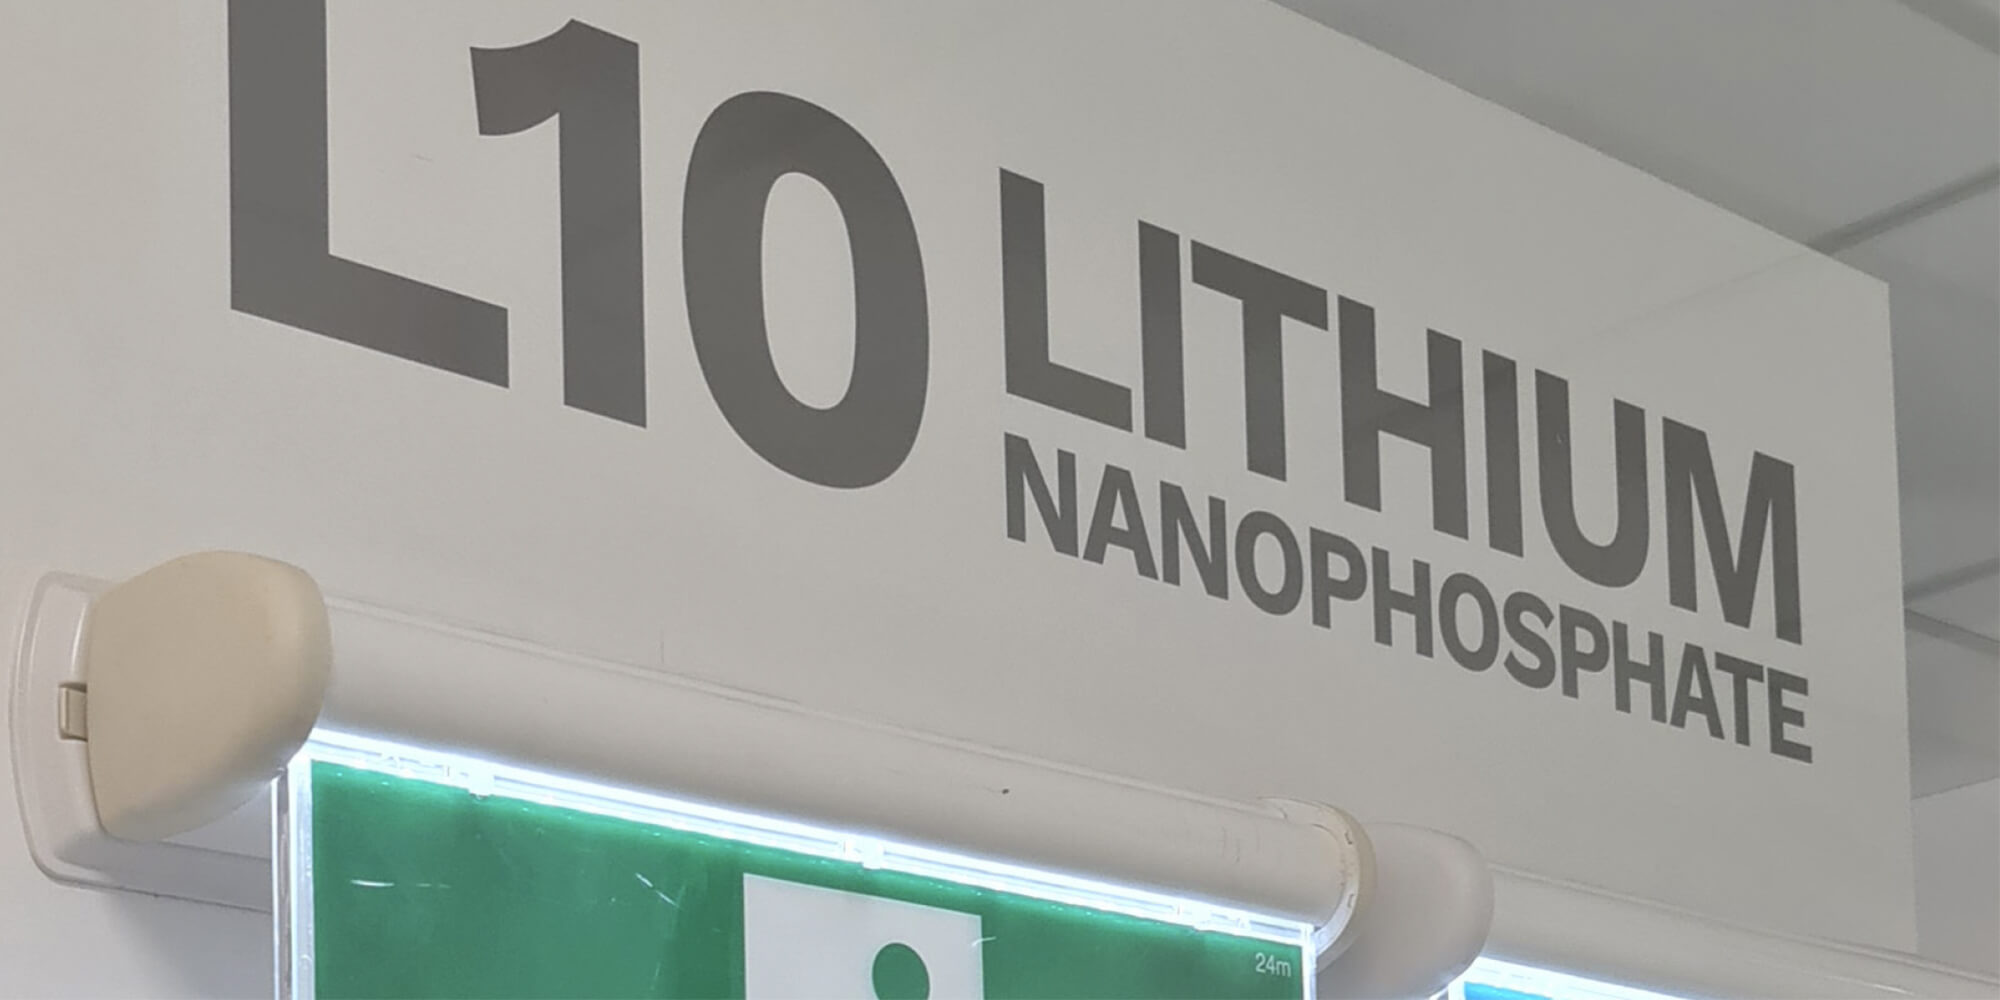 clevertronics emergency lighting L10 lithium nanophosphate